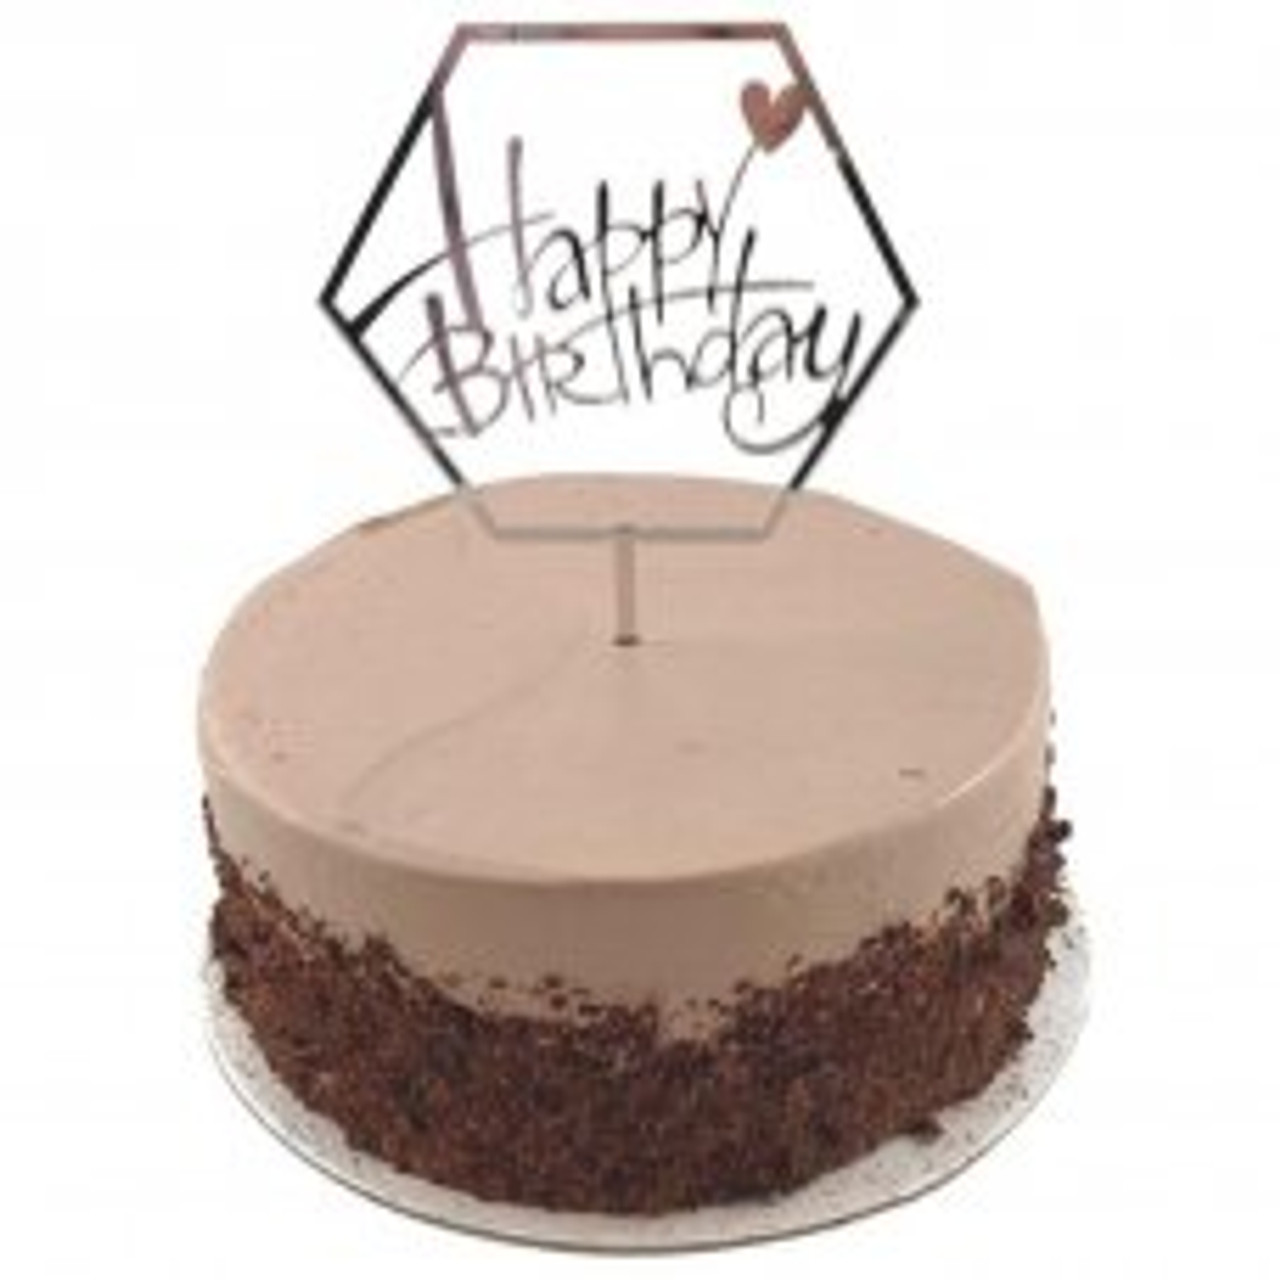 443023 CAKE TOPPER ACRYLIC HAPPY BIRTHDAY HEX SILVER